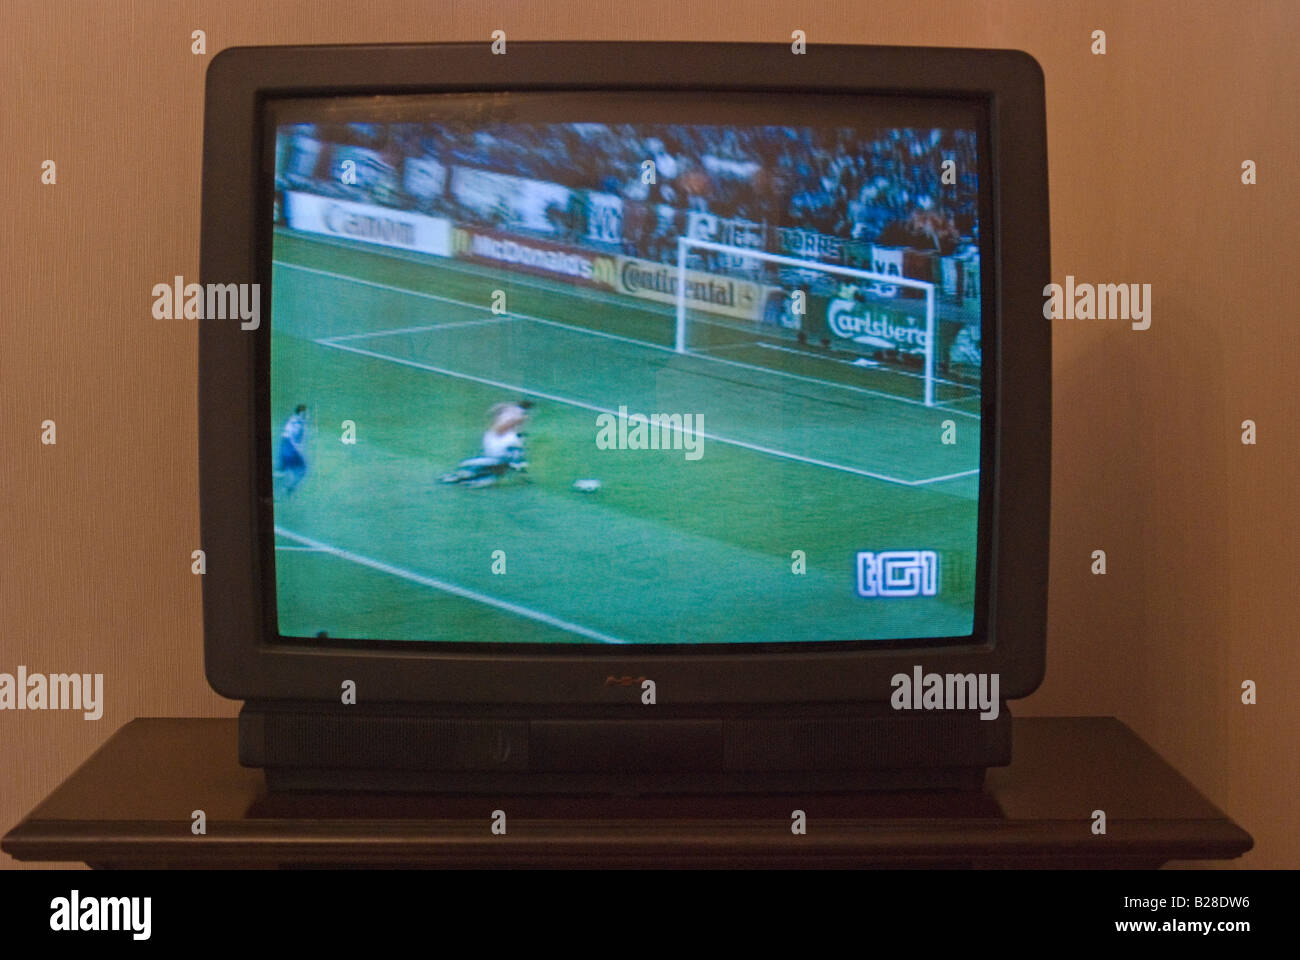 football match on tv screen Stock Photo